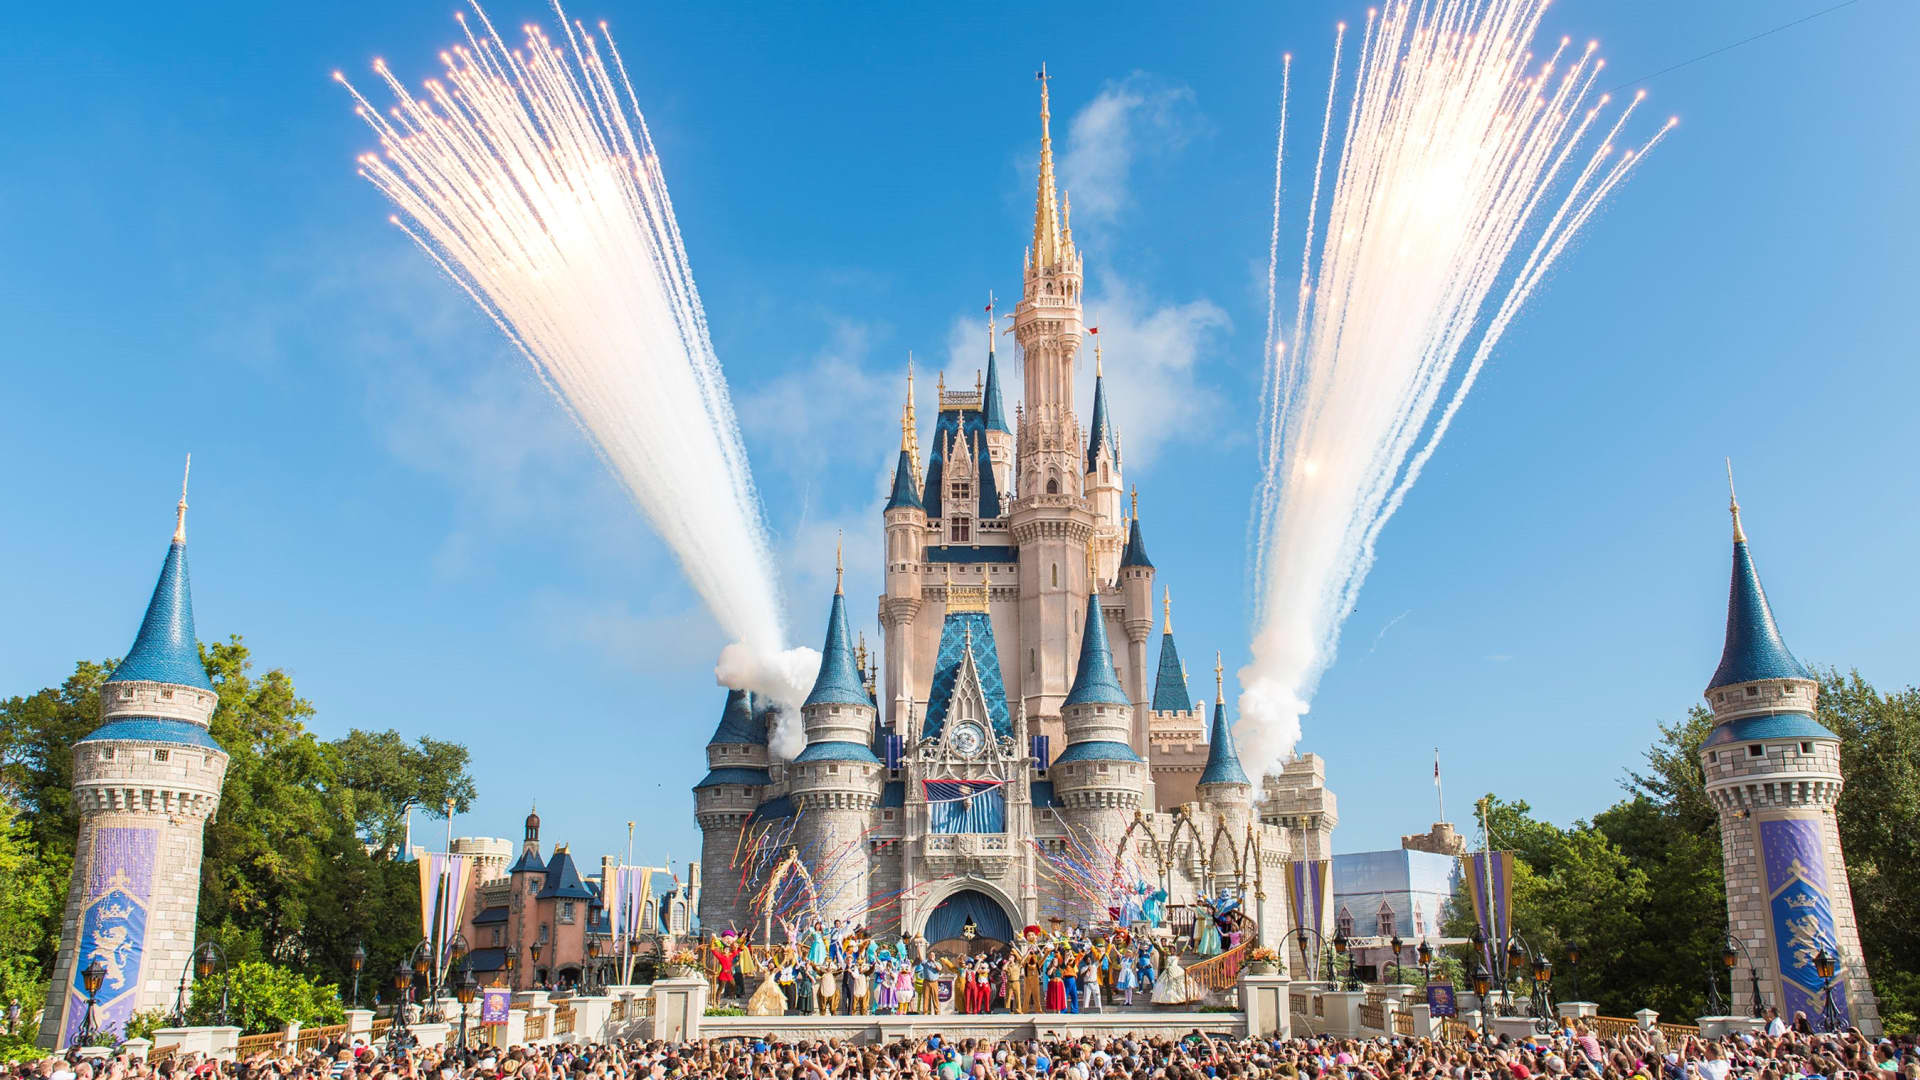 Disney plans to spend billions in Florida despite DeSantis fight